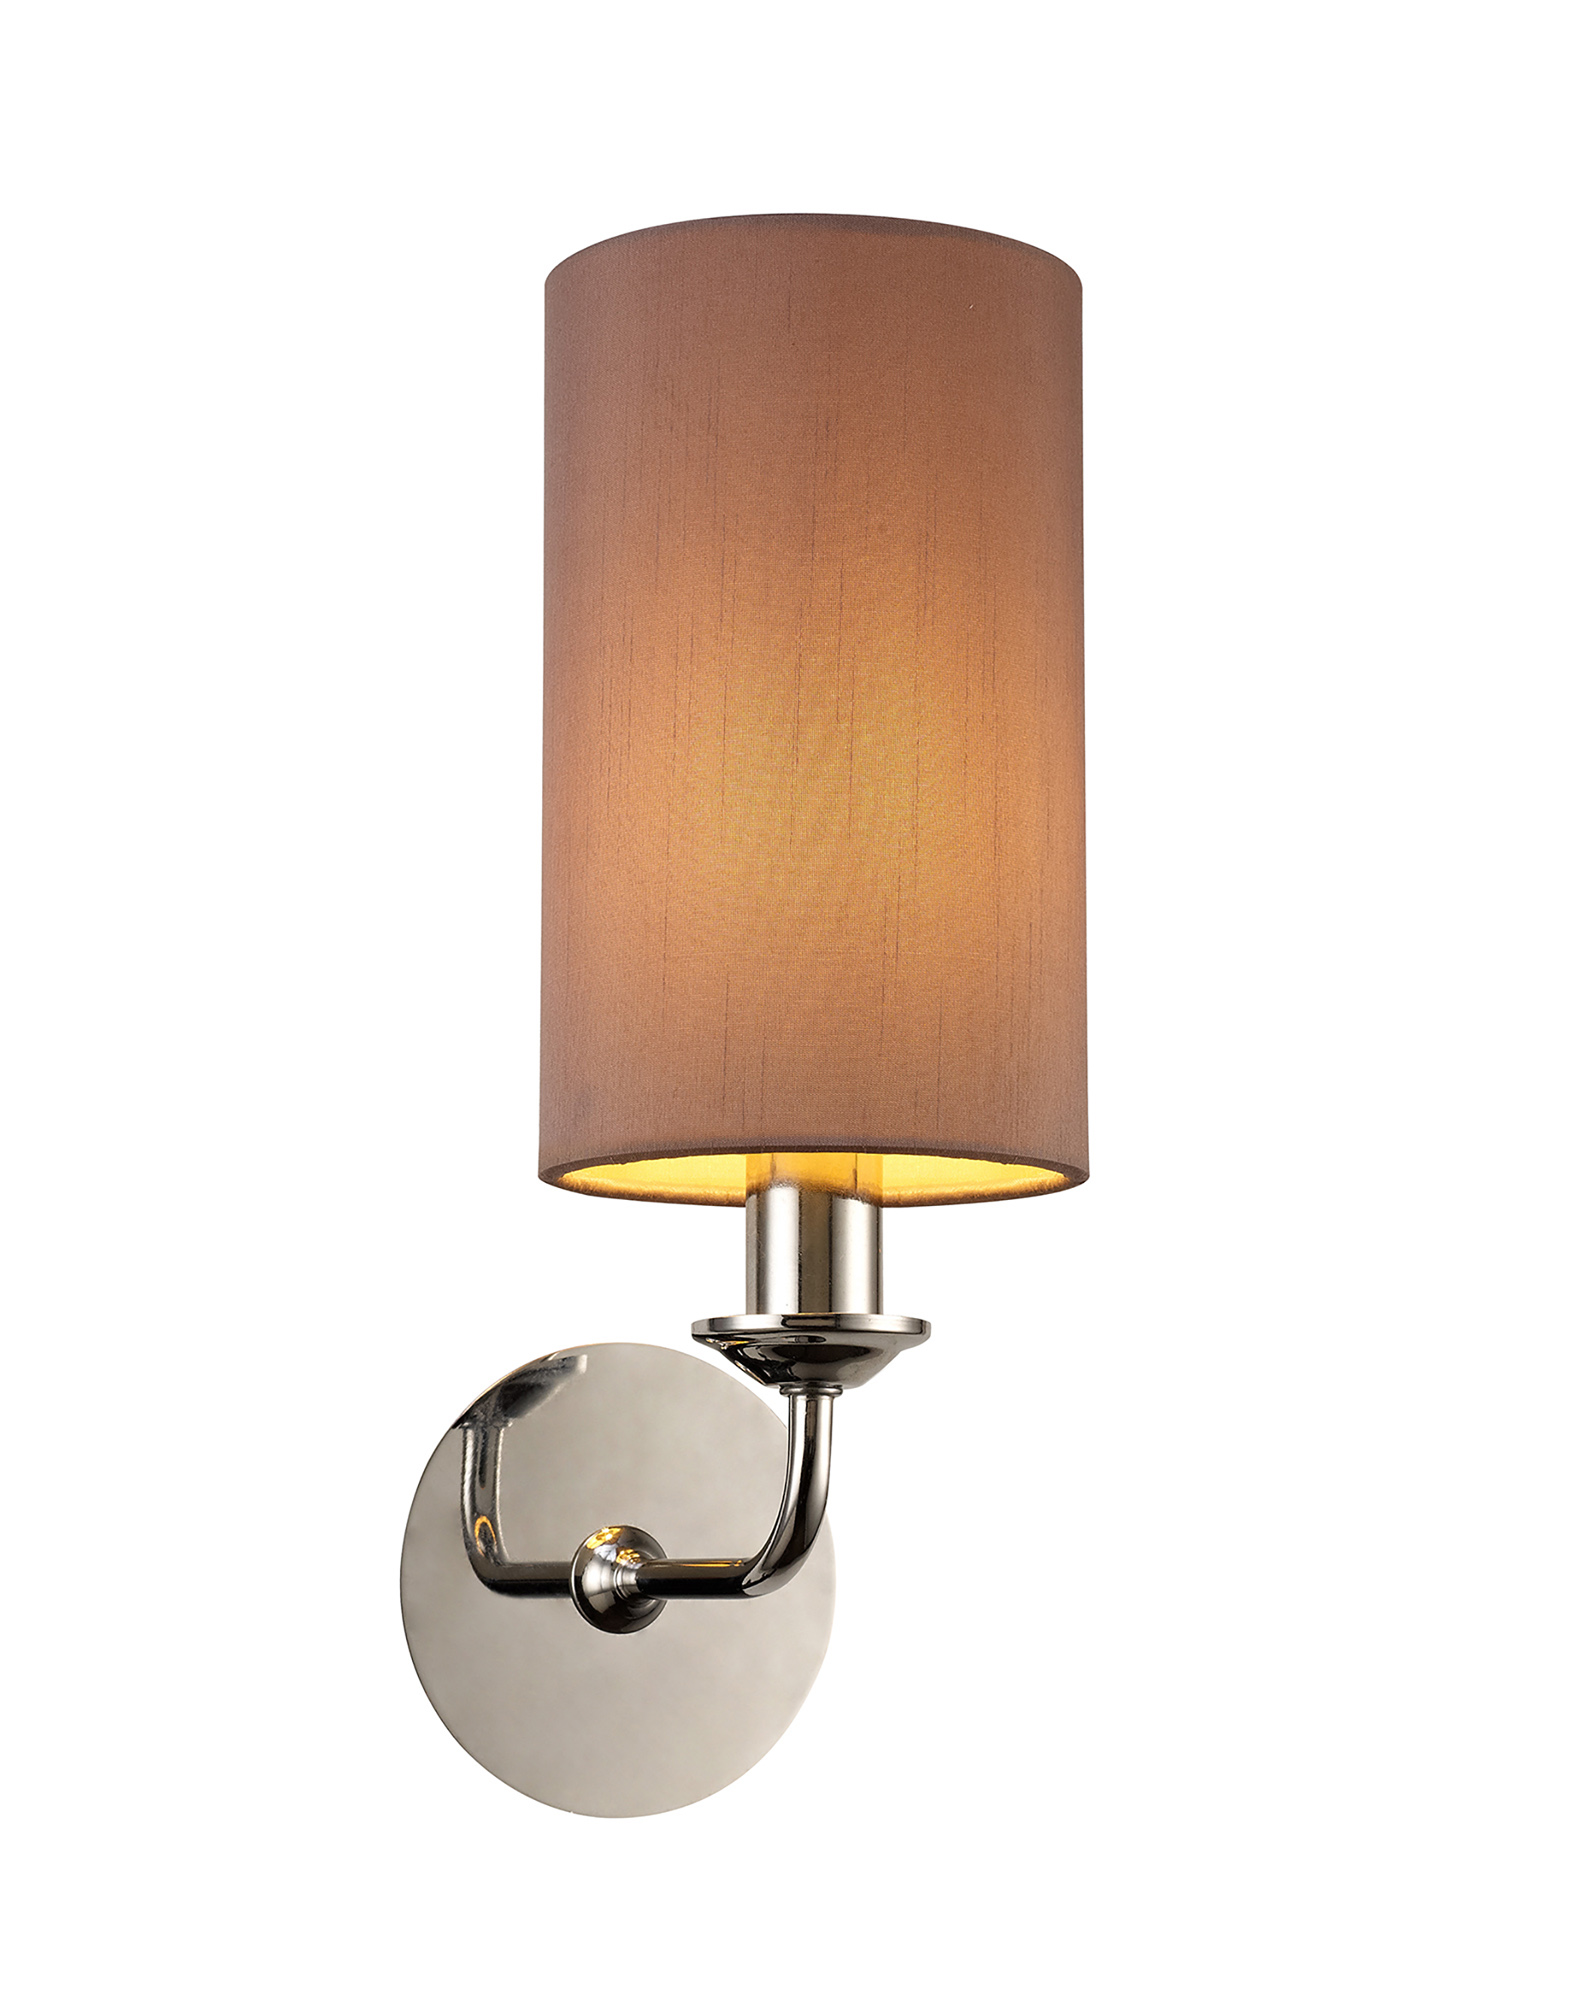 DK0018  Banyan Wall Lamp 1 Light Polished Chrome; Taupe/Halo Gold